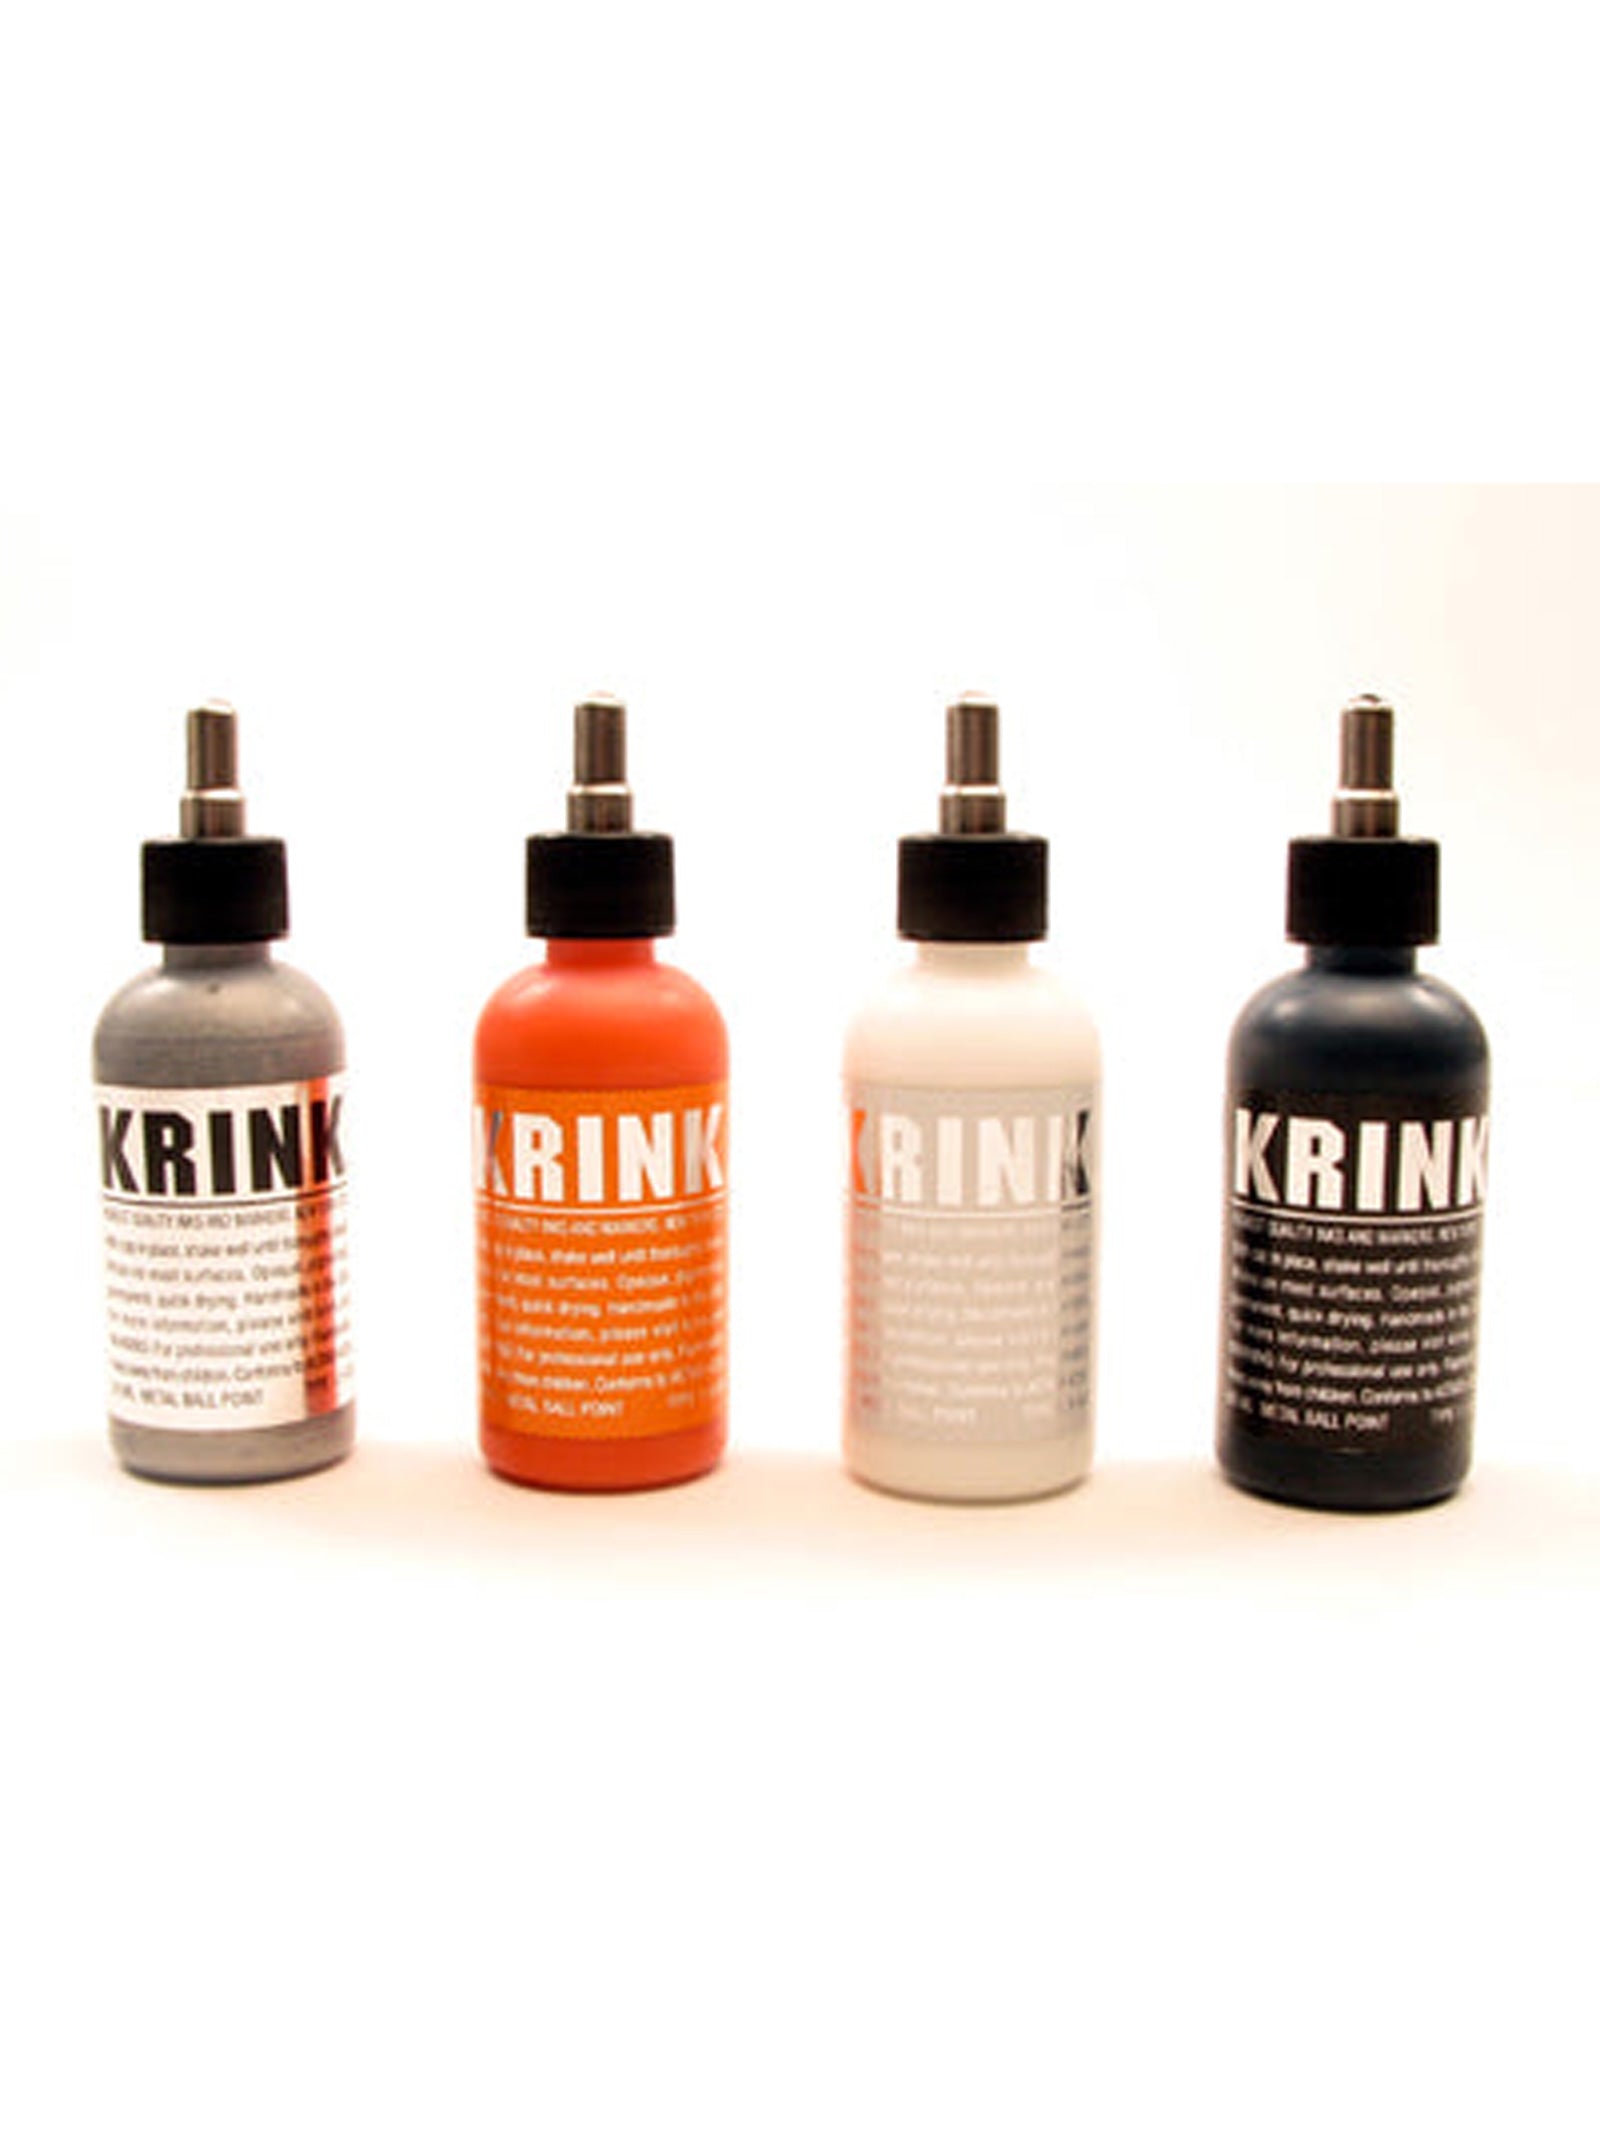 Krink K-66 Squeeze Metal Tip Paint Marker (10 Color Options) Reviews 2024